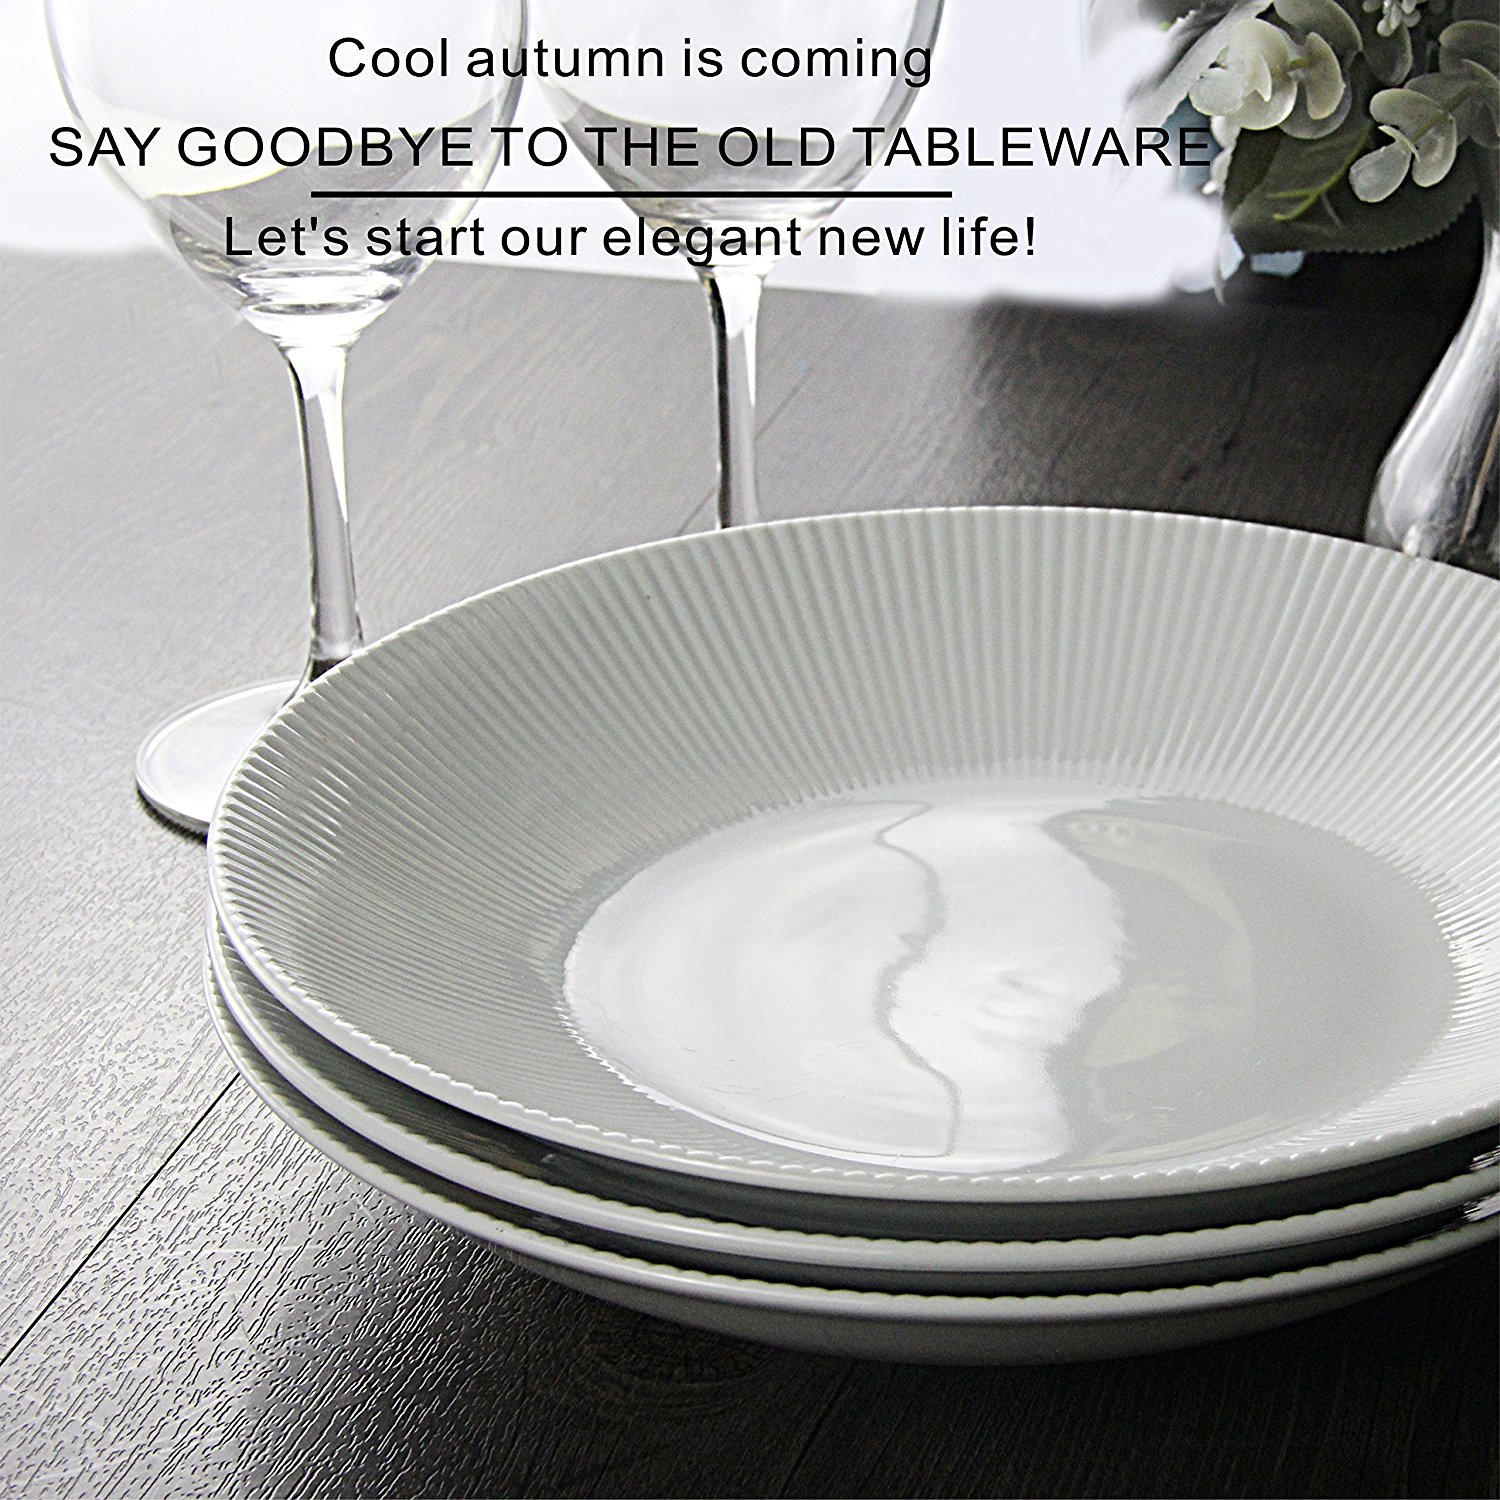 YHY 9.6-inch 30 oz Porcelain Serving Bowls, White Pasta/Salad Bowls 4 Set #Review #HGG17